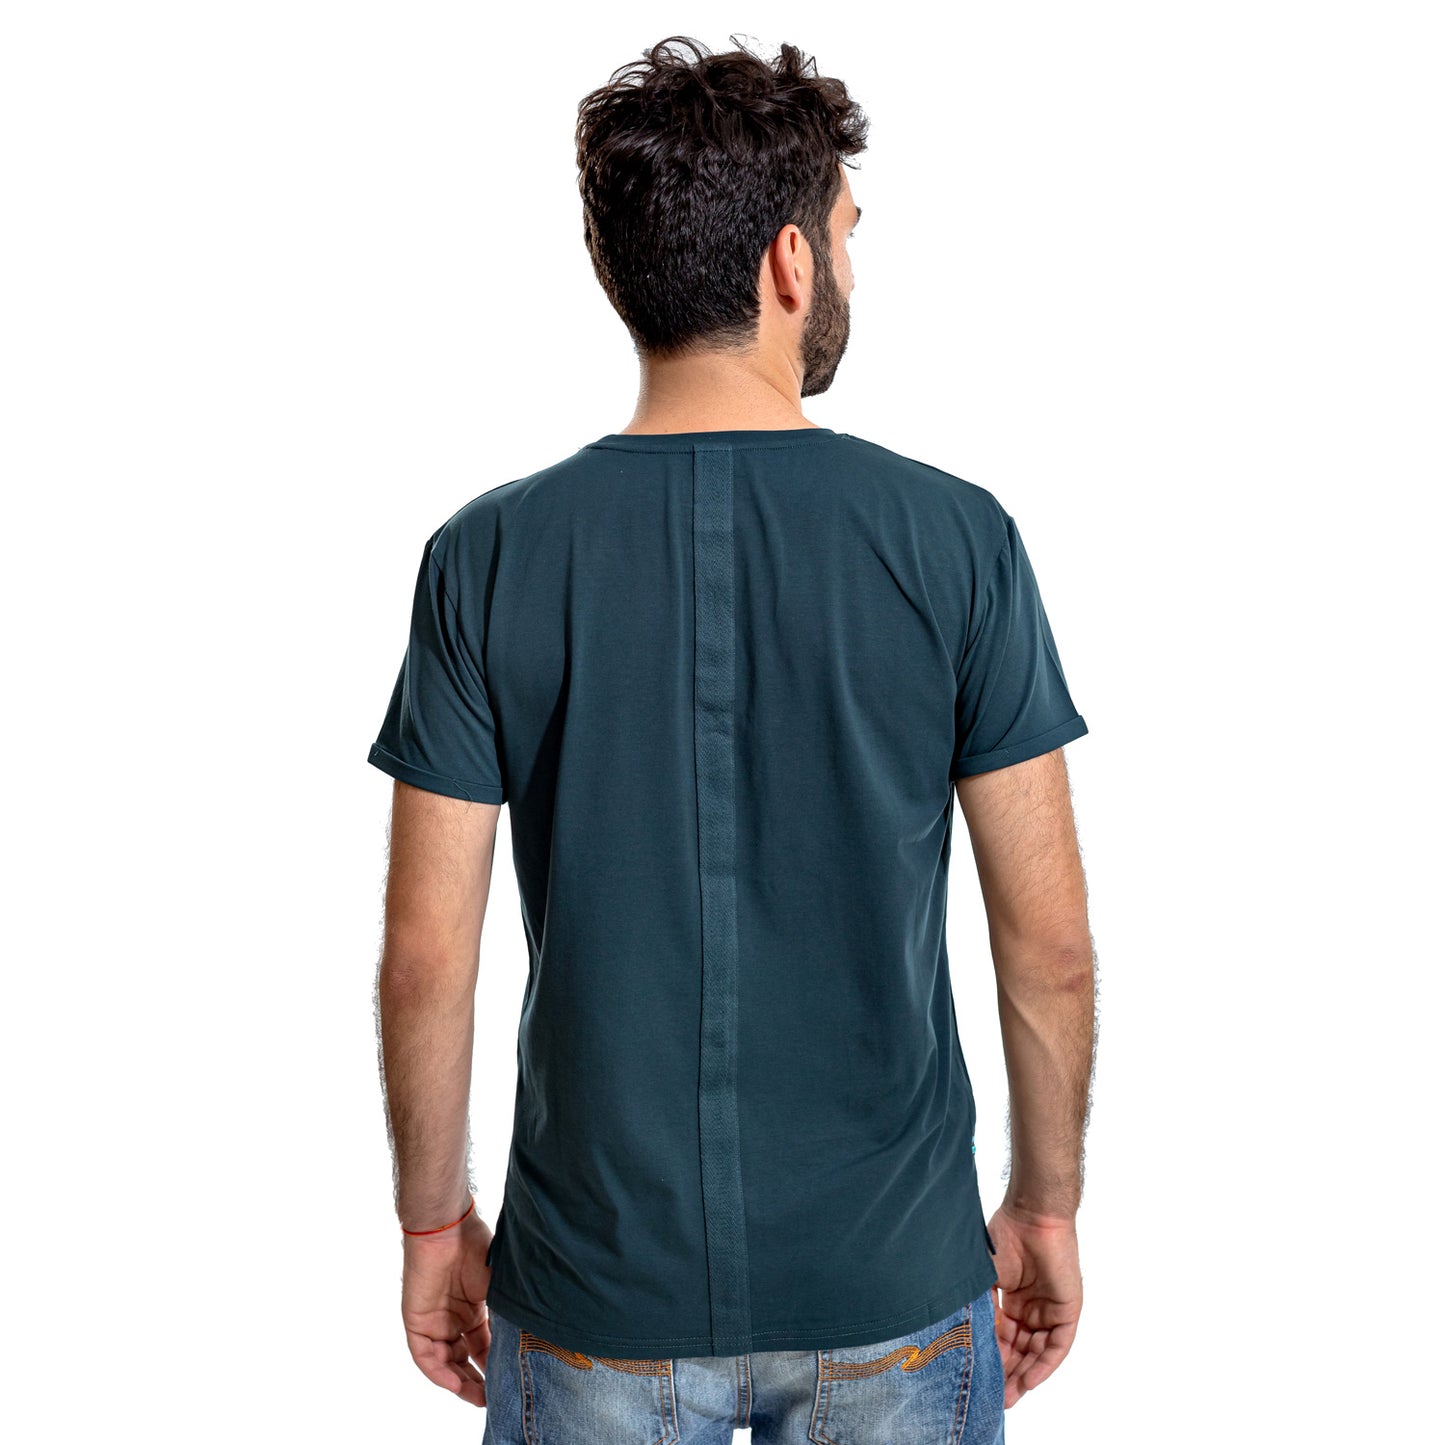 Blue Aegean, T-shirt, shirt, man, plane tee, soft cotton, sleek, back view, model